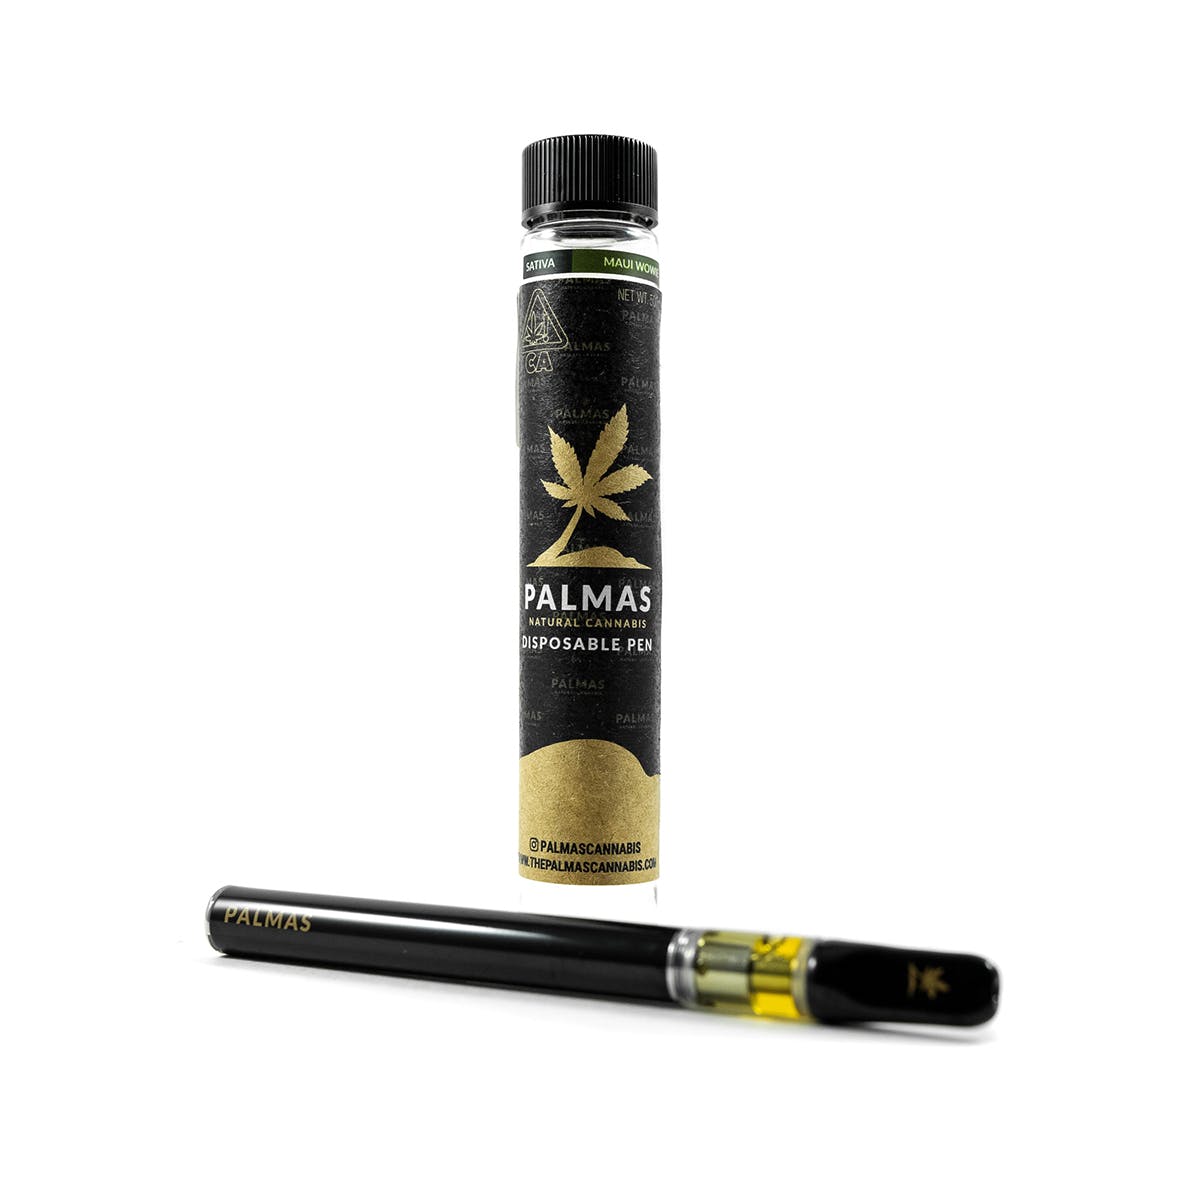 marijuana-dispensaries-gold-20-cap-collective-in-los-angeles-palmas-disposable-maui-wowie-500mg